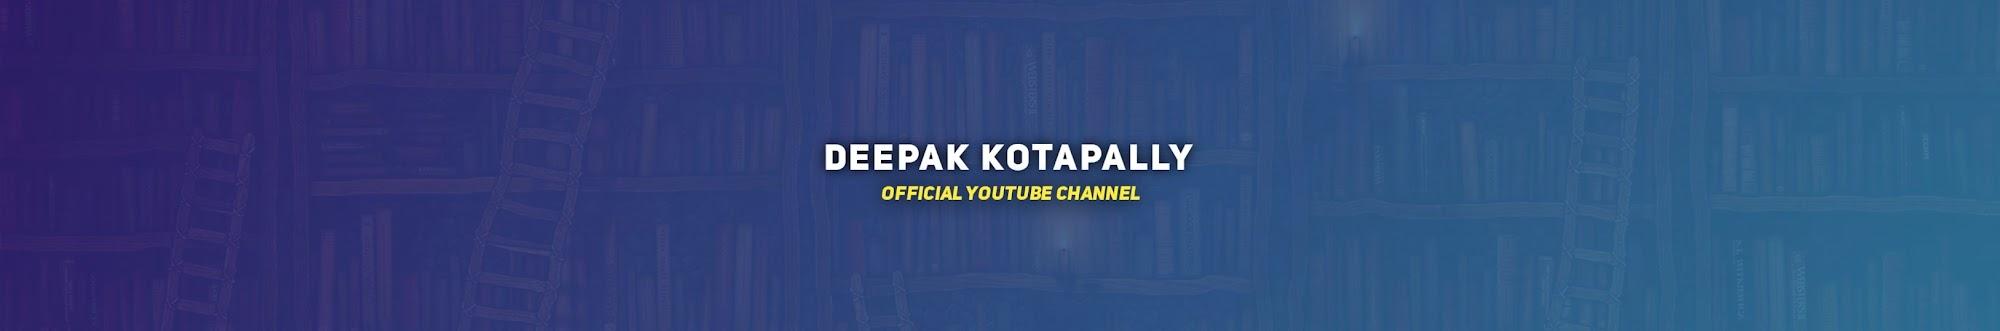 Deepak Kotapally